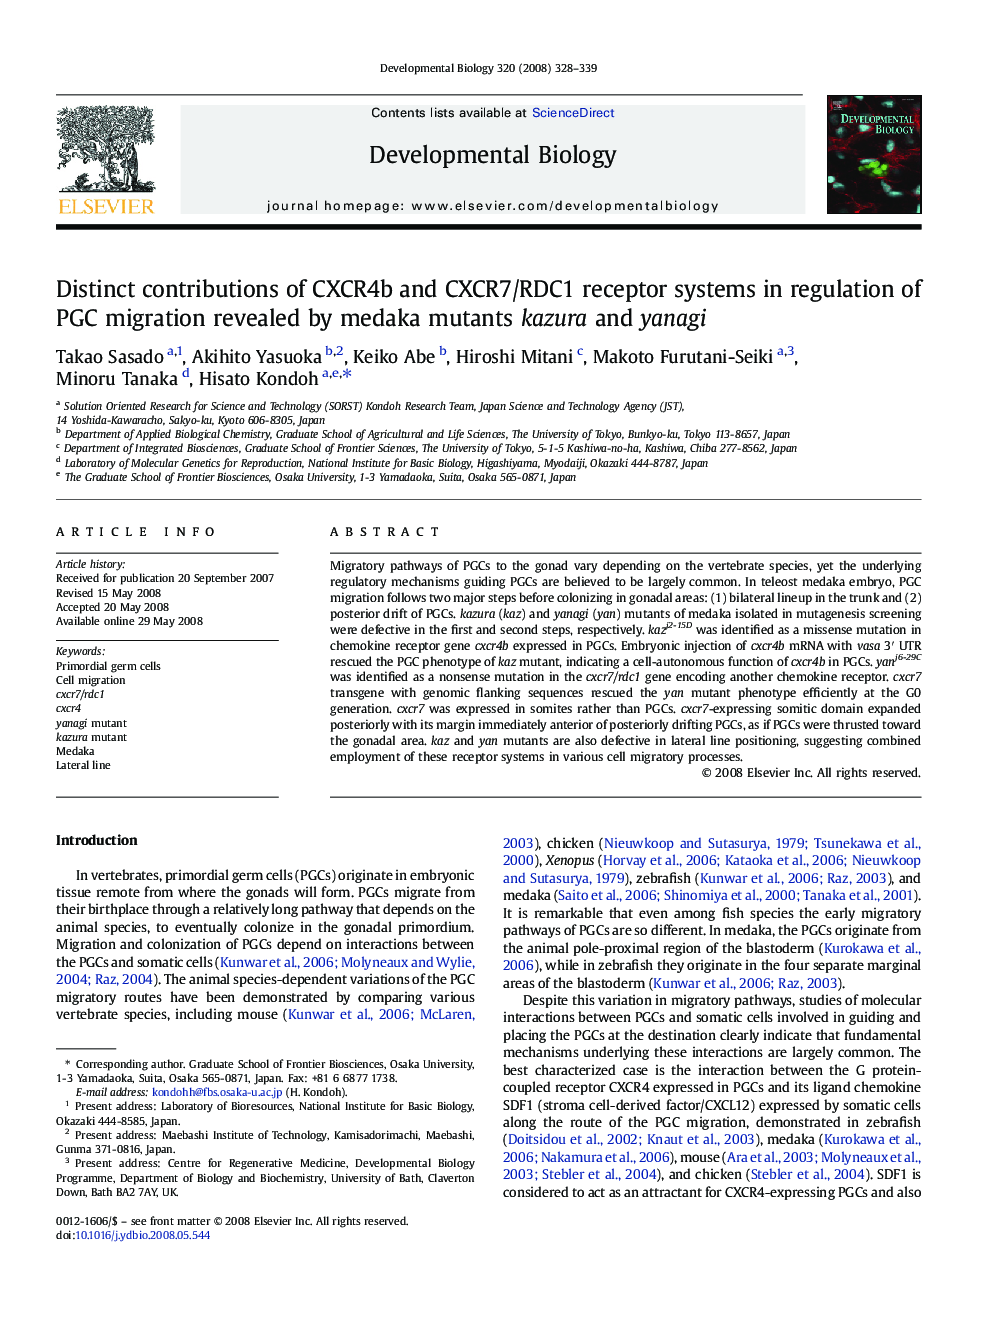 Distinct contributions of CXCR4b and CXCR7/RDC1 receptor systems in regulation of PGC migration revealed by medaka mutants kazura and yanagi